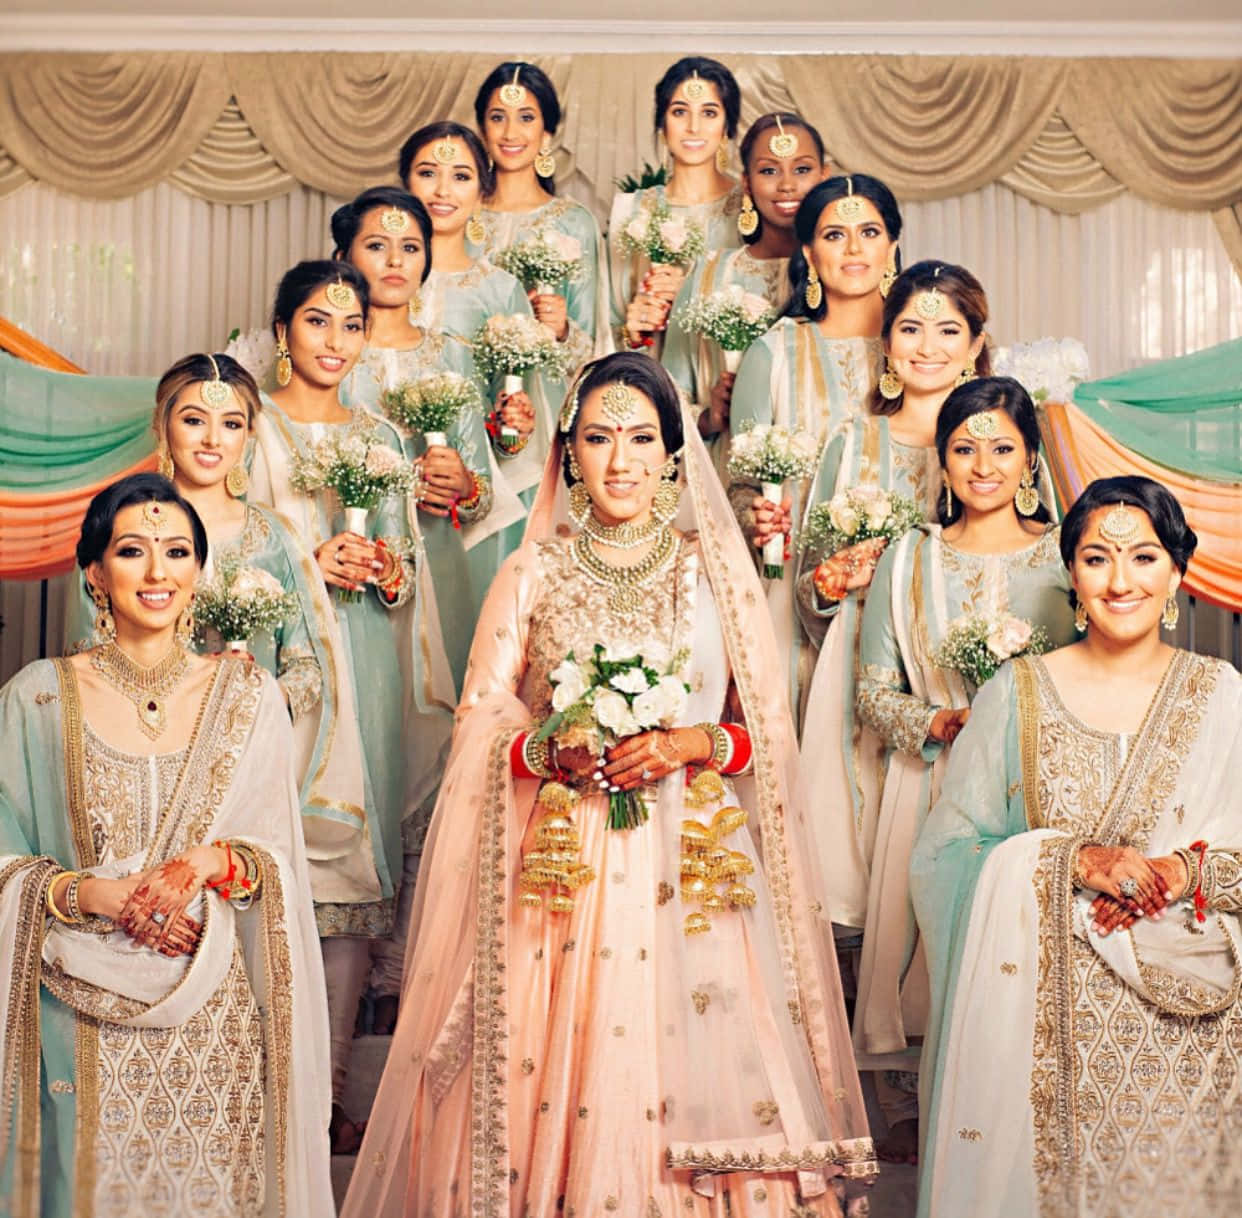 Indian Bride With Twelve Bridesmaids Picture